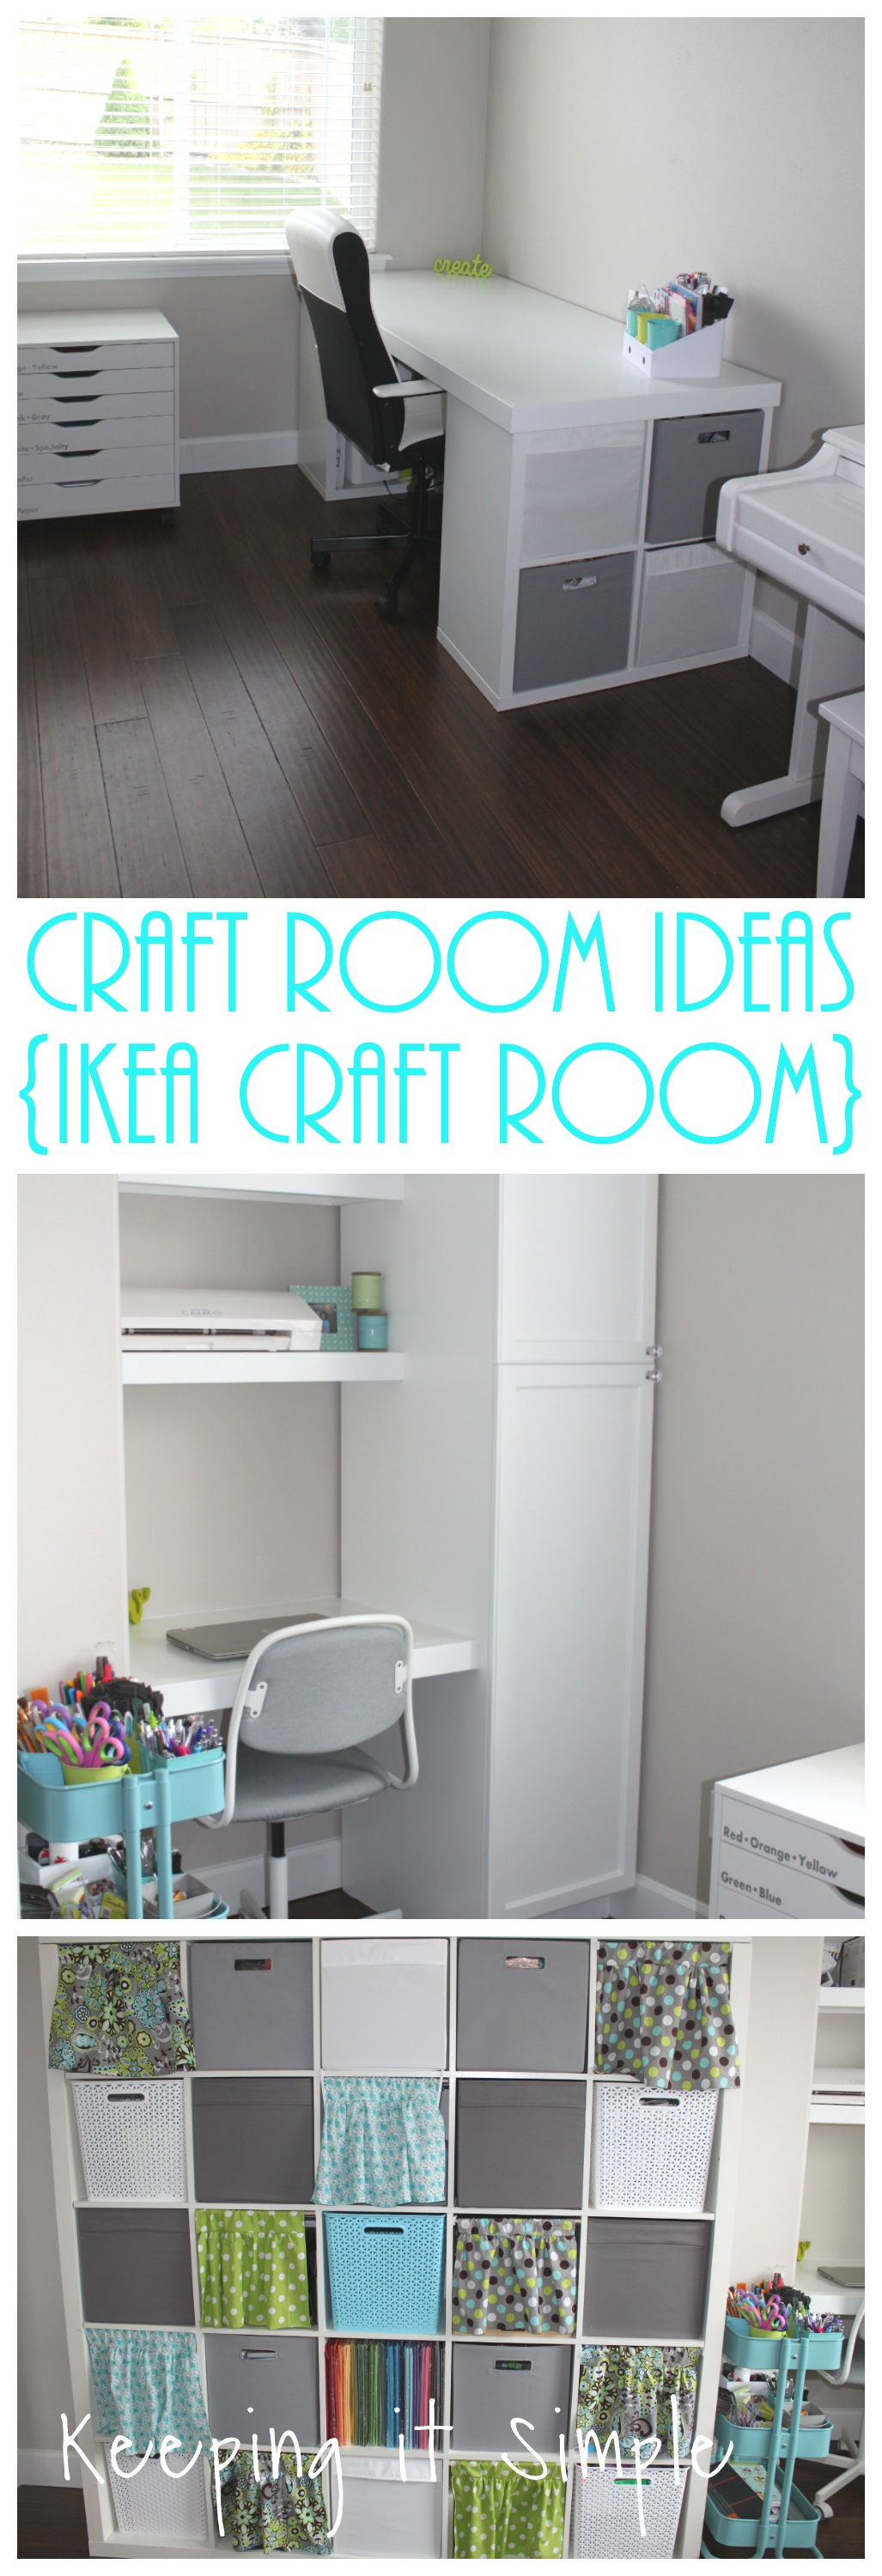 Craft Room Ideas, Organization and Storage {Ikea Craft Room} - Keeping it  Simple